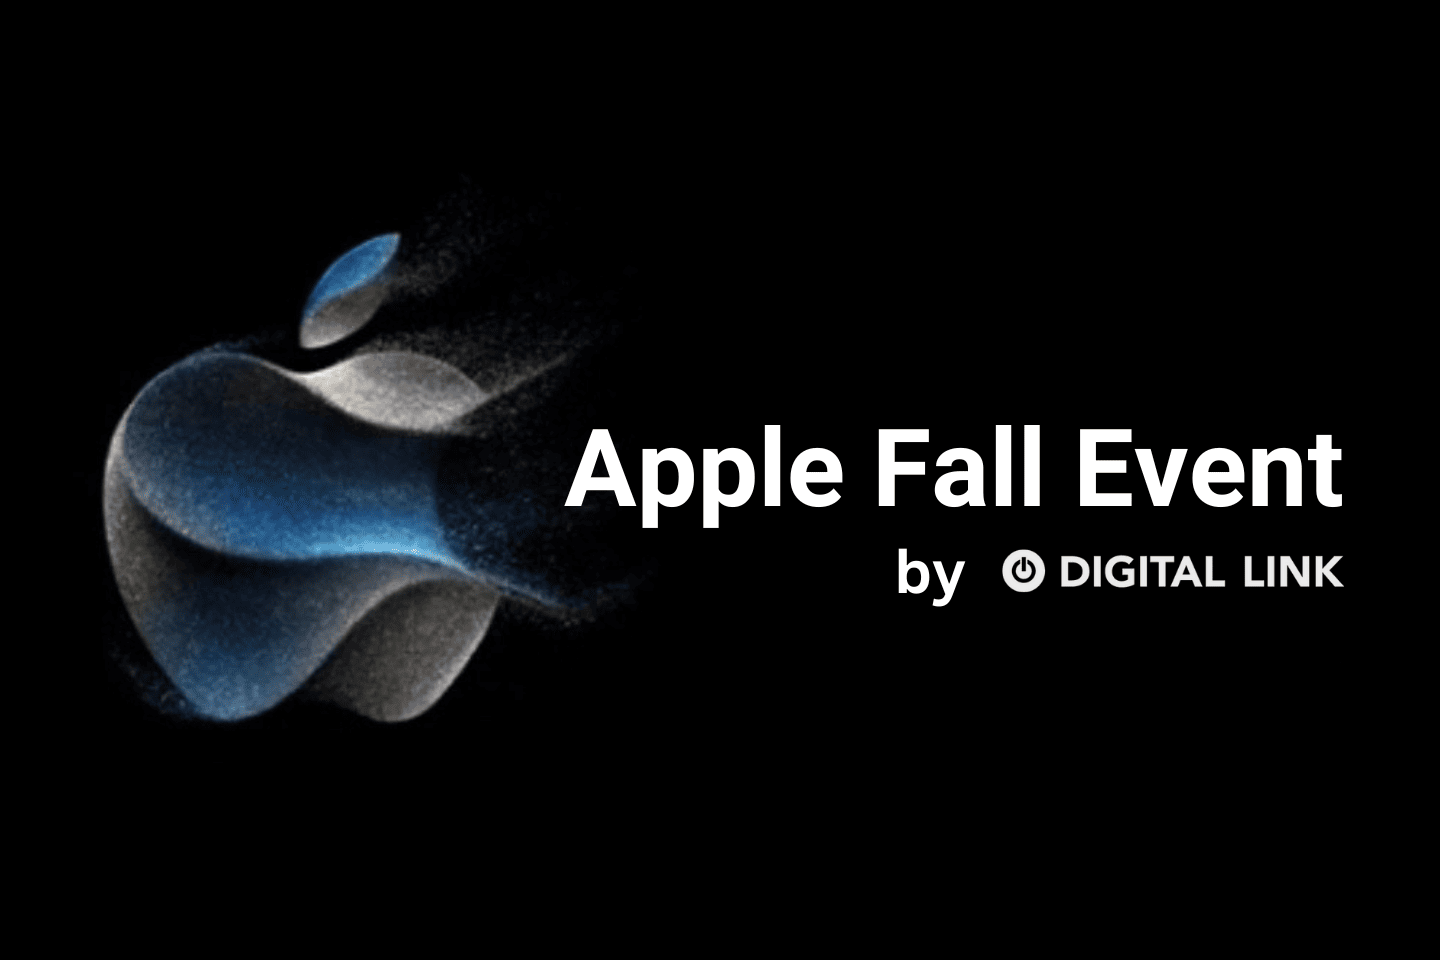 Apple Fall Event